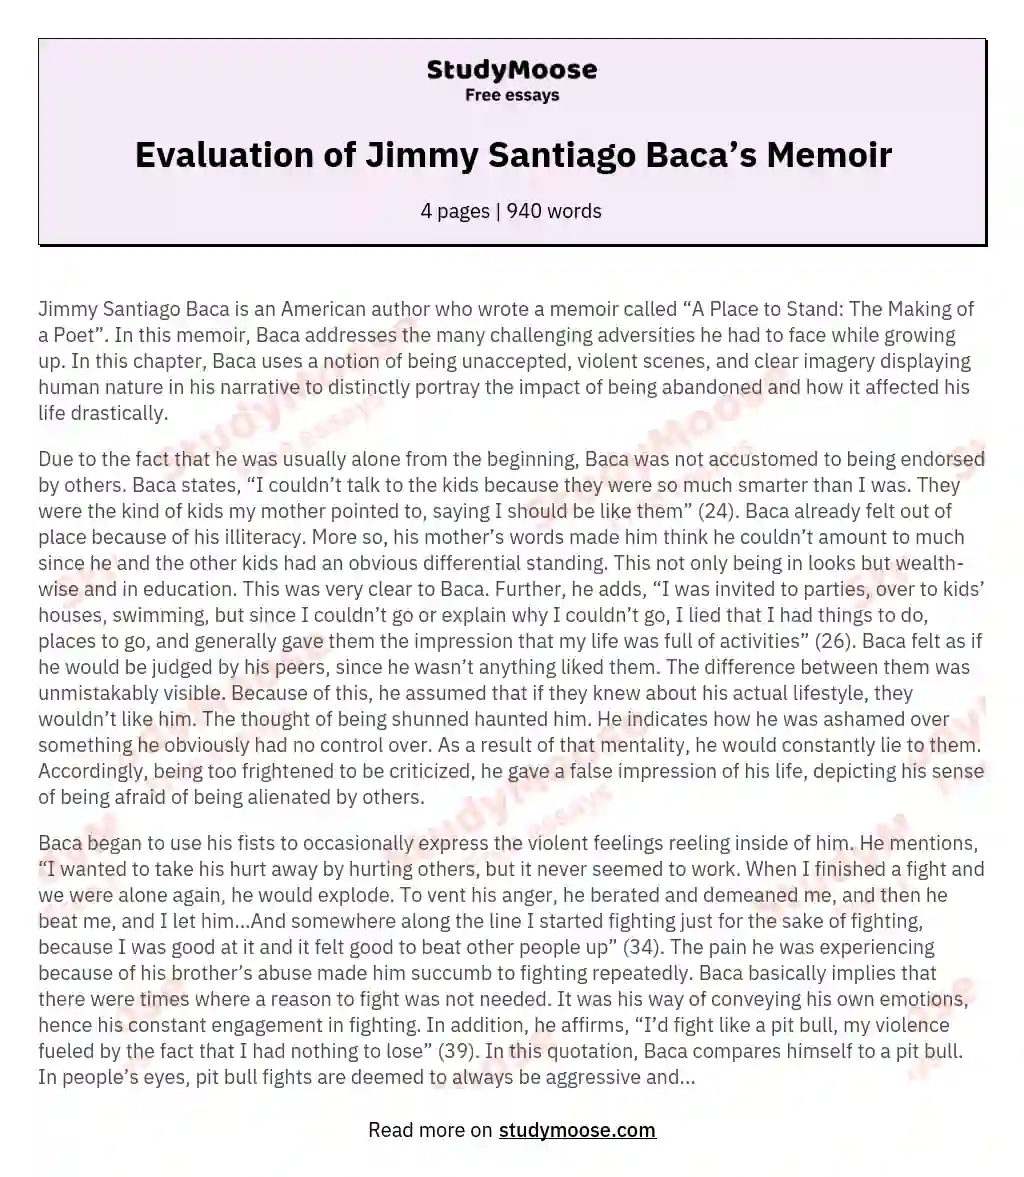 Evaluation of Jimmy Santiago Baca’s Memoir